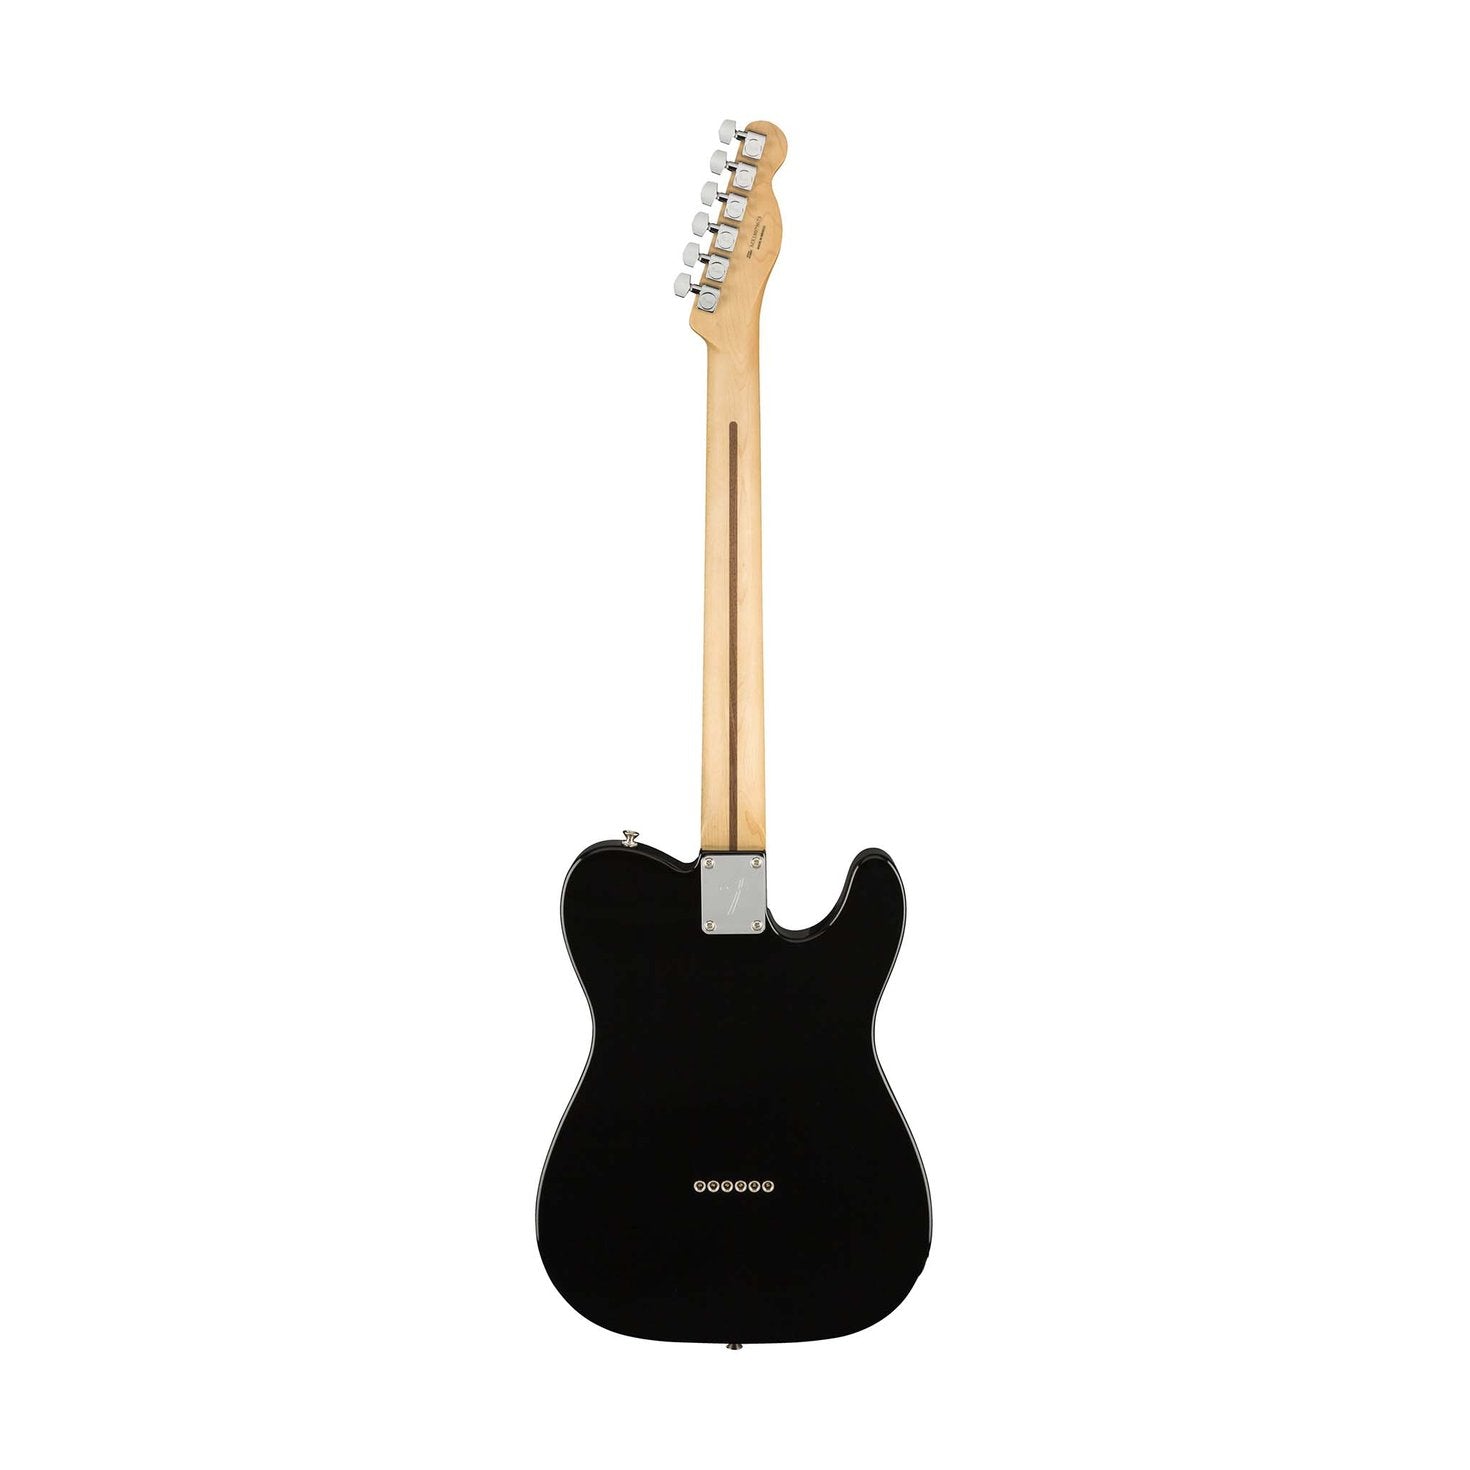 Fender Player Telecaster Left-Handed Electric Guitar, Maple FB, Black, FENDER, ELECTRIC GUITAR, fender-eletric-guitar-f03-014-5222-506, ZOSO MUSIC SDN BHD